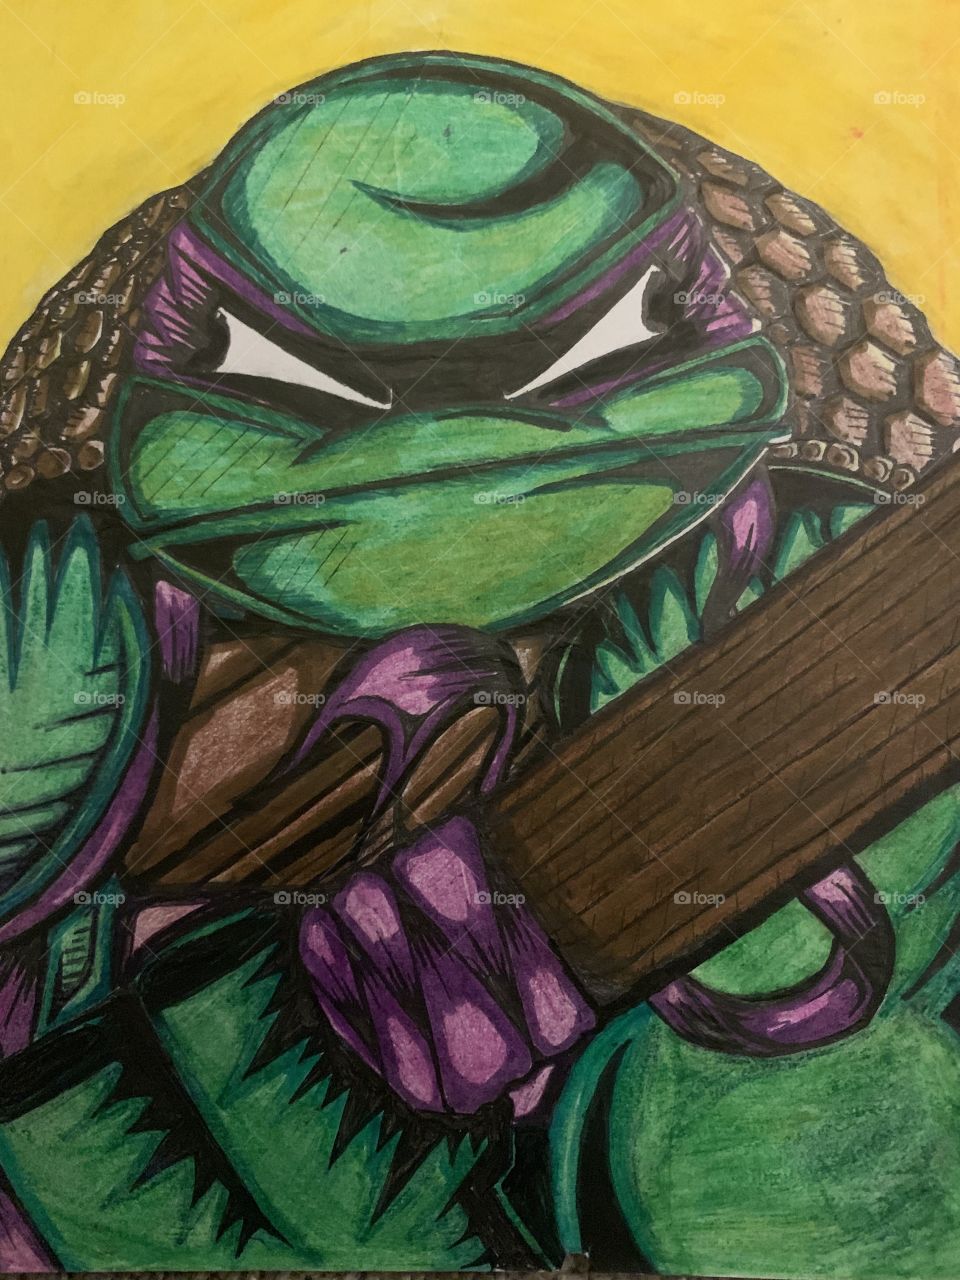 Donatello ninja turtles 